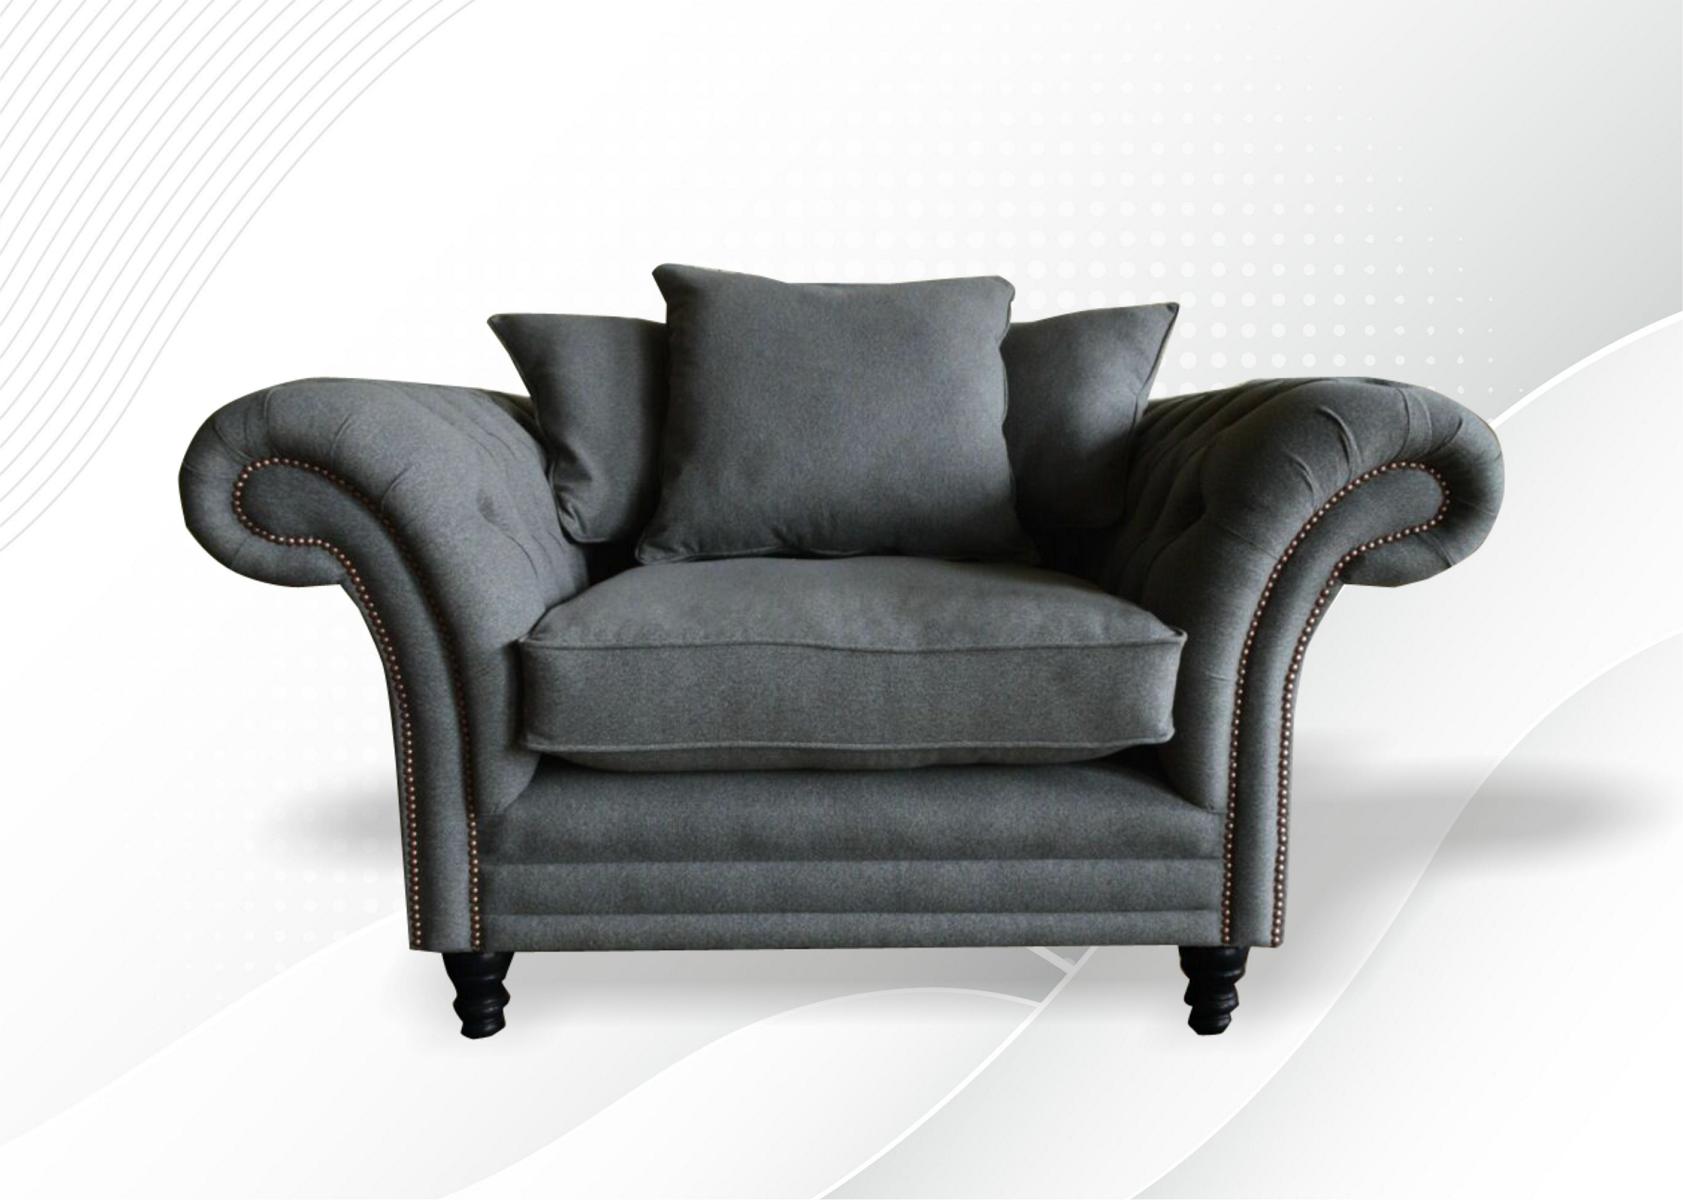 Leder Chesterfield 1 Sitzer Couch Polster Sitz Textil Stoff Couchen Sofas Sofa